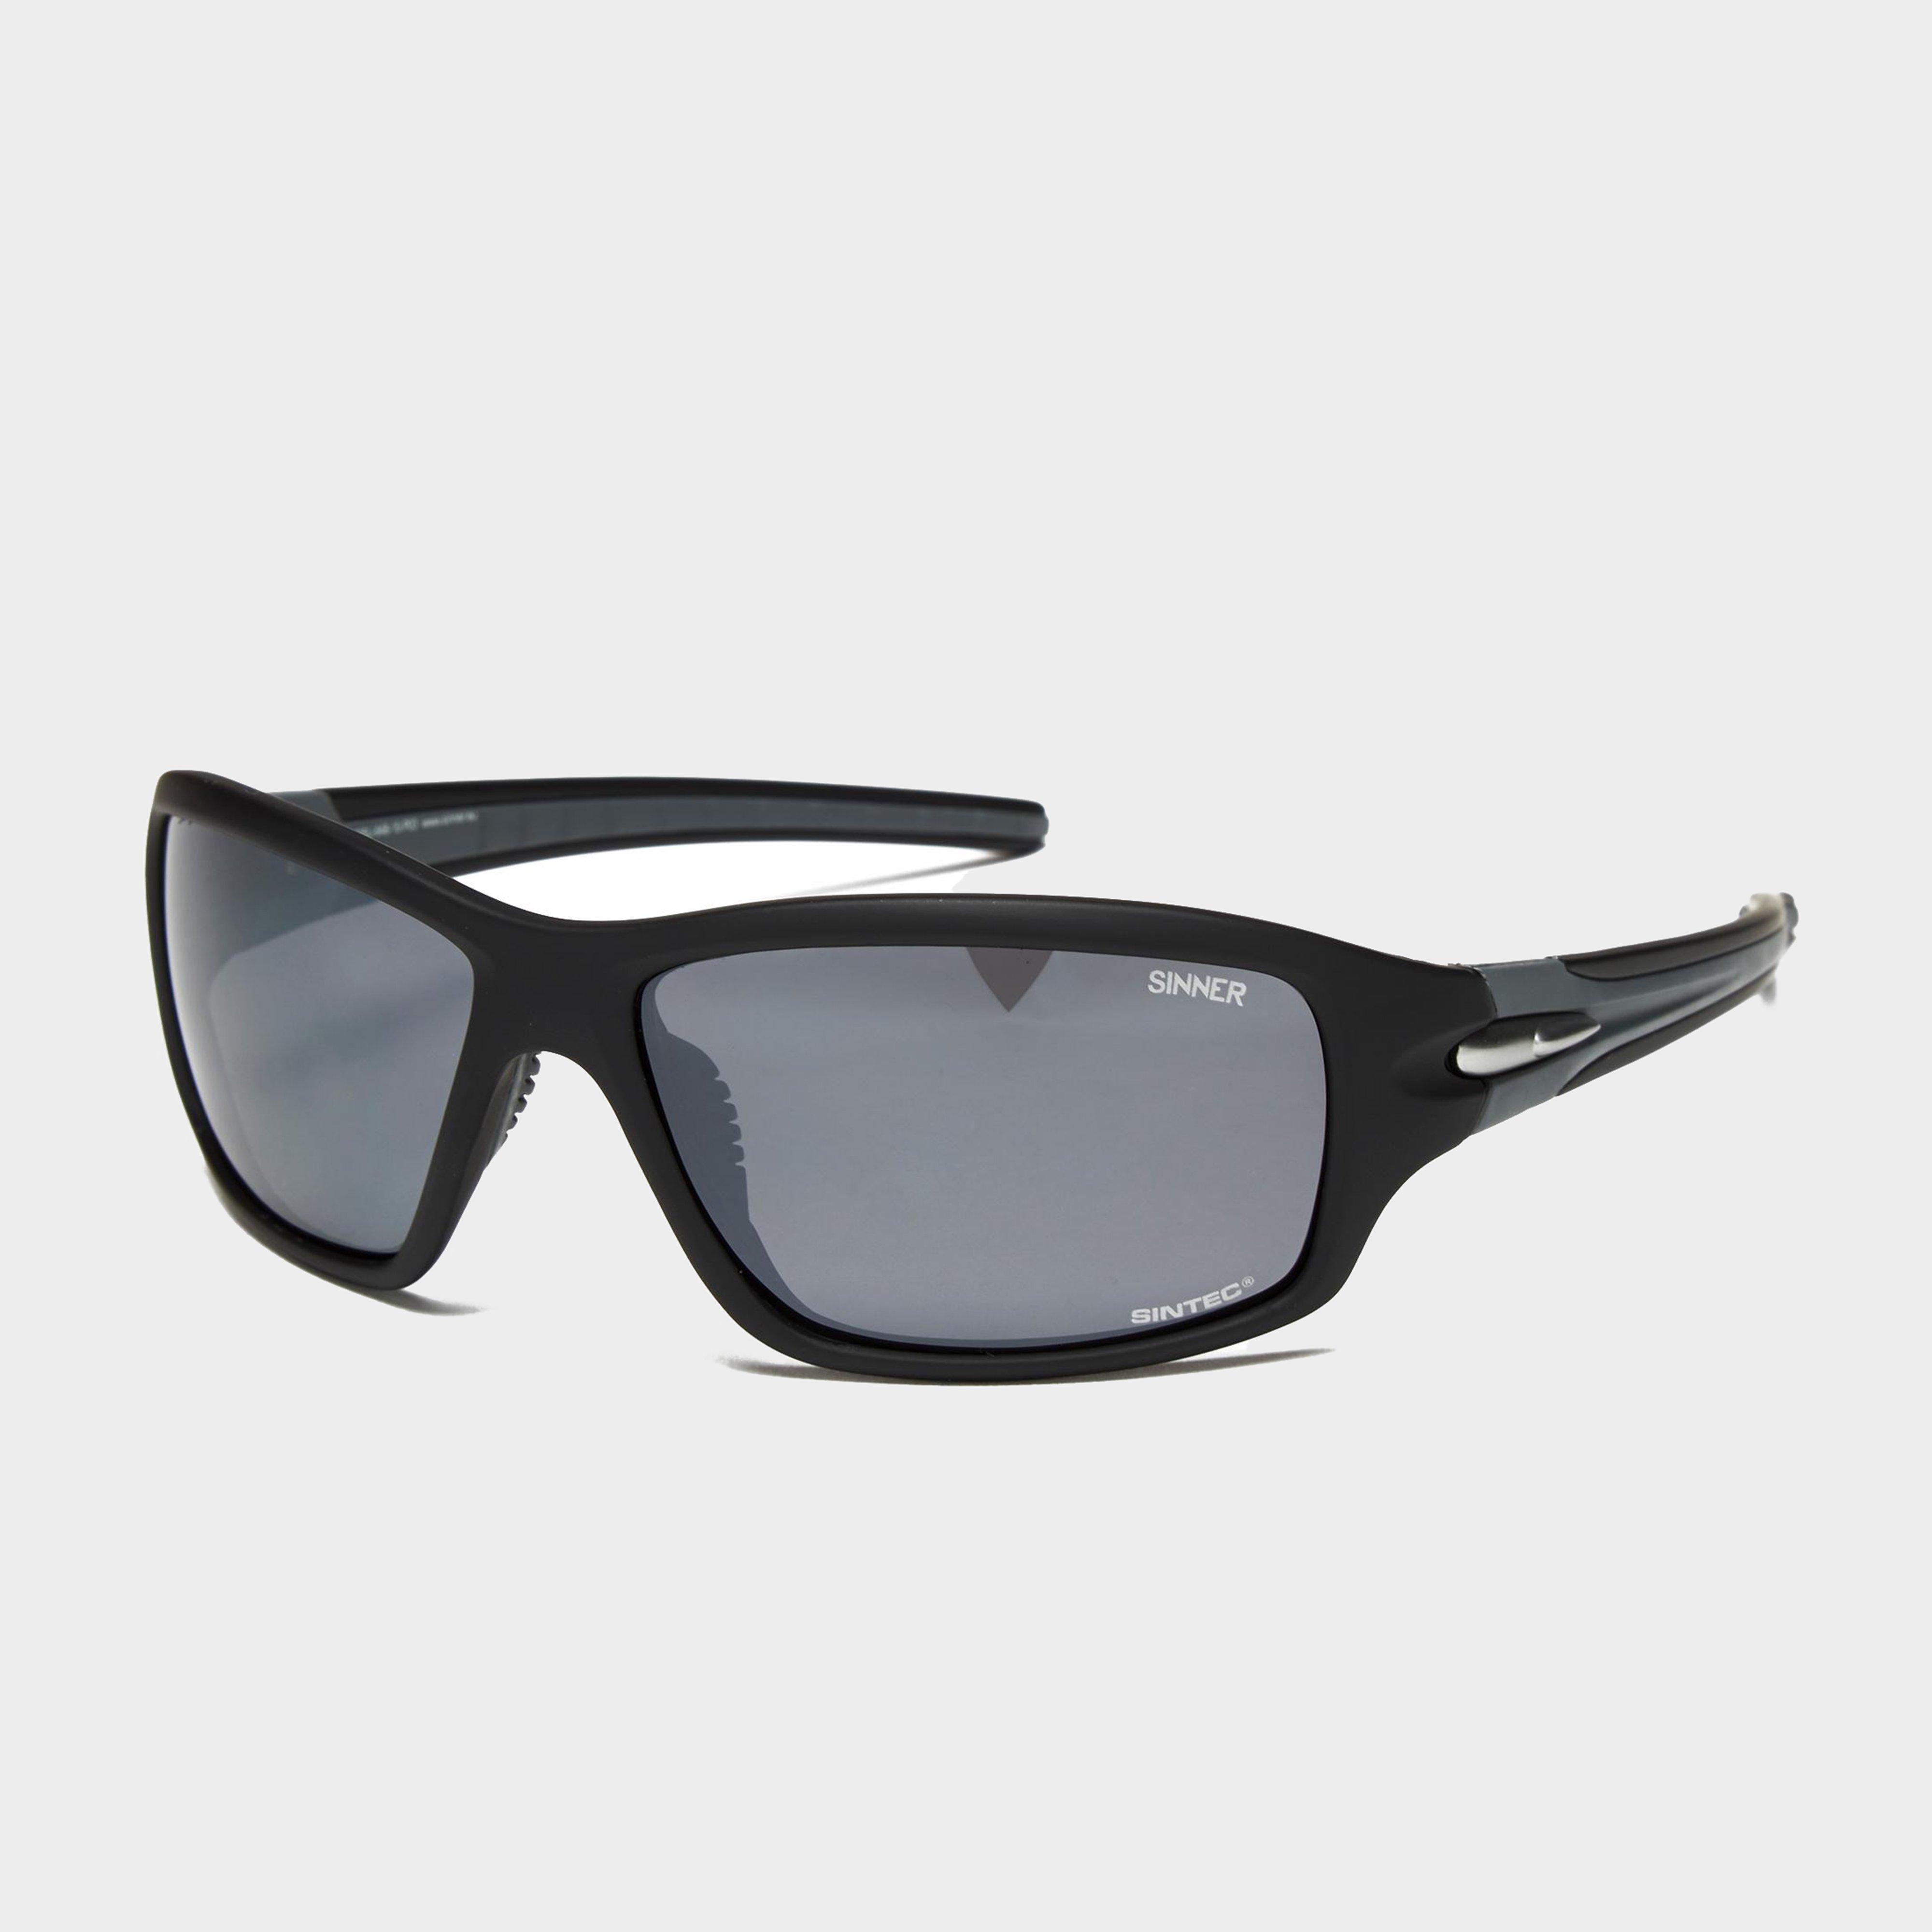 Sinner Frost Sunglasses - Black/blk  Black/blk